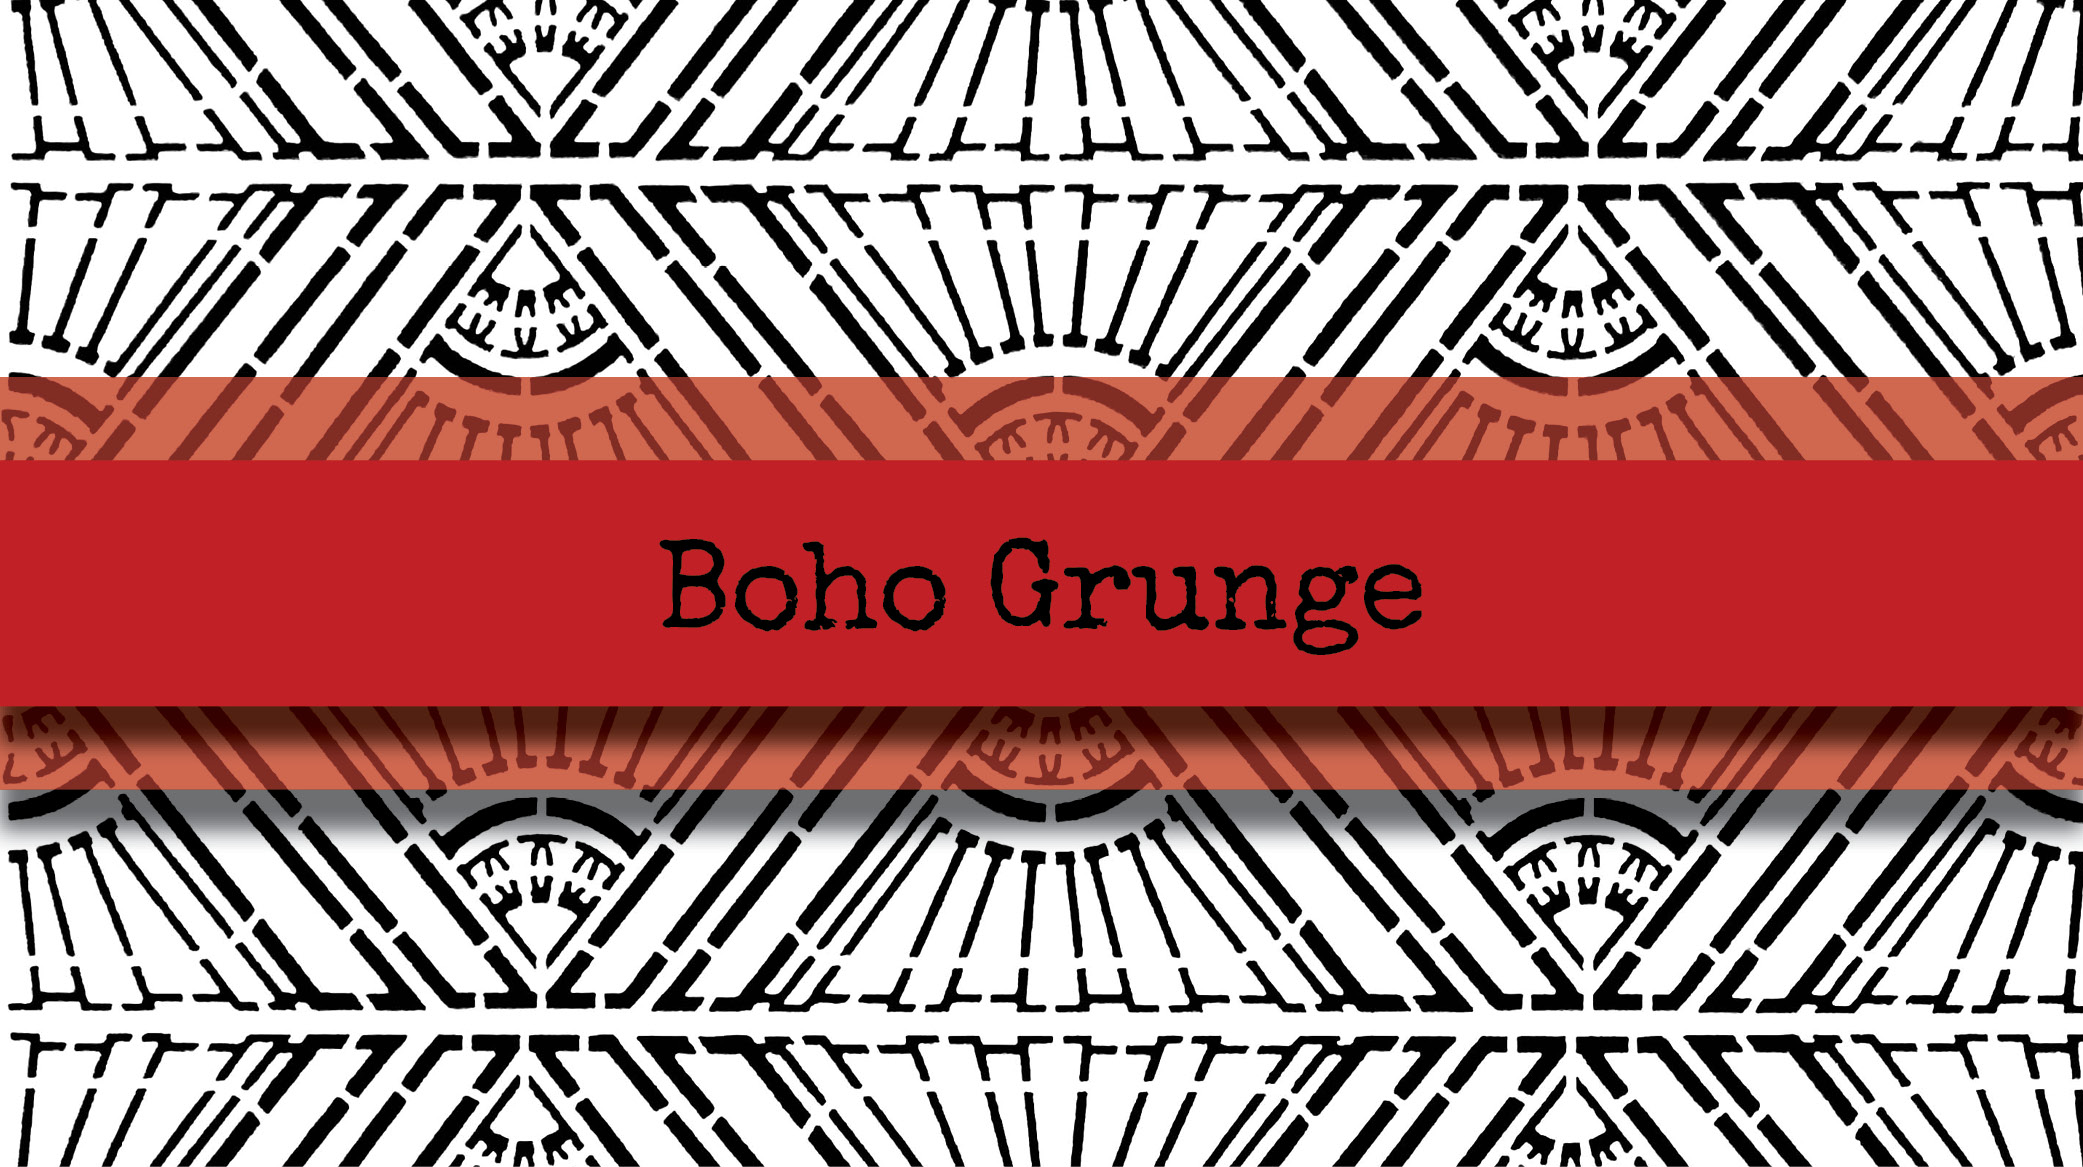 Boho Grunge Online Class Supplies | Gwen Lafleur | StencilGirl Products